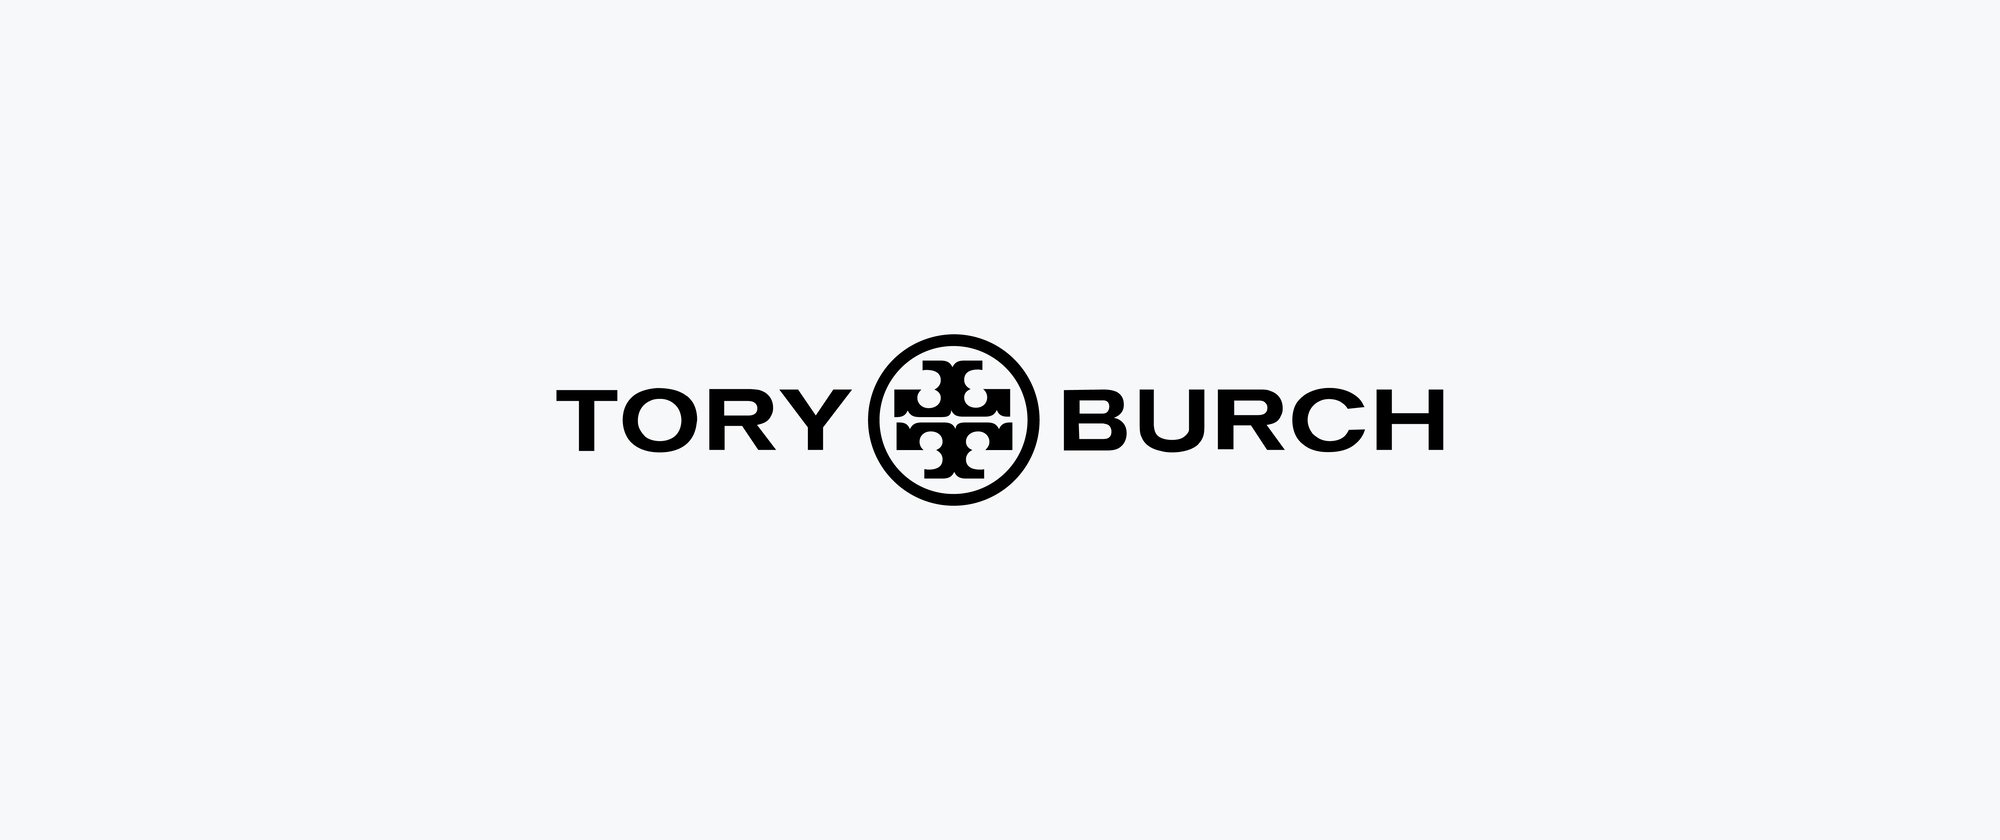 customer_page_logos_Tory burch-1